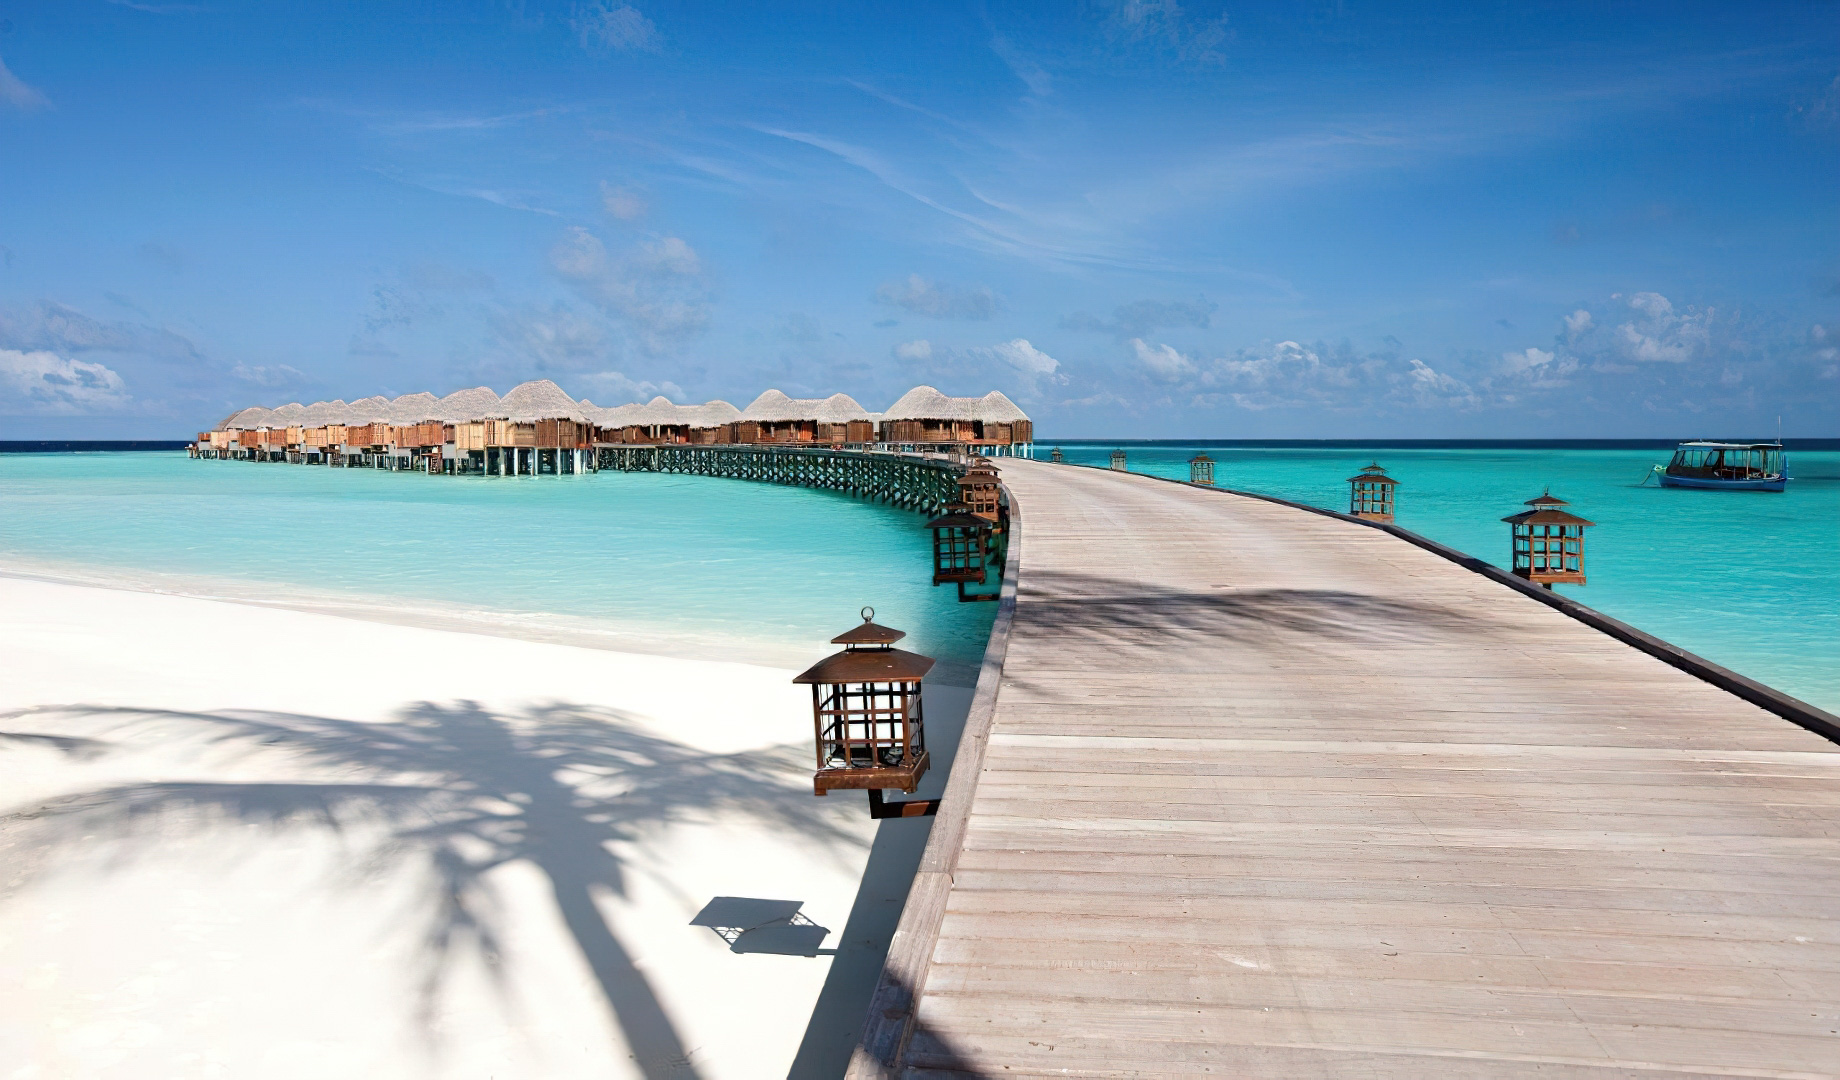 Constance Halaveli Resort - North Ari Atoll, Maldives - Overwater Villas Jetty Walkway